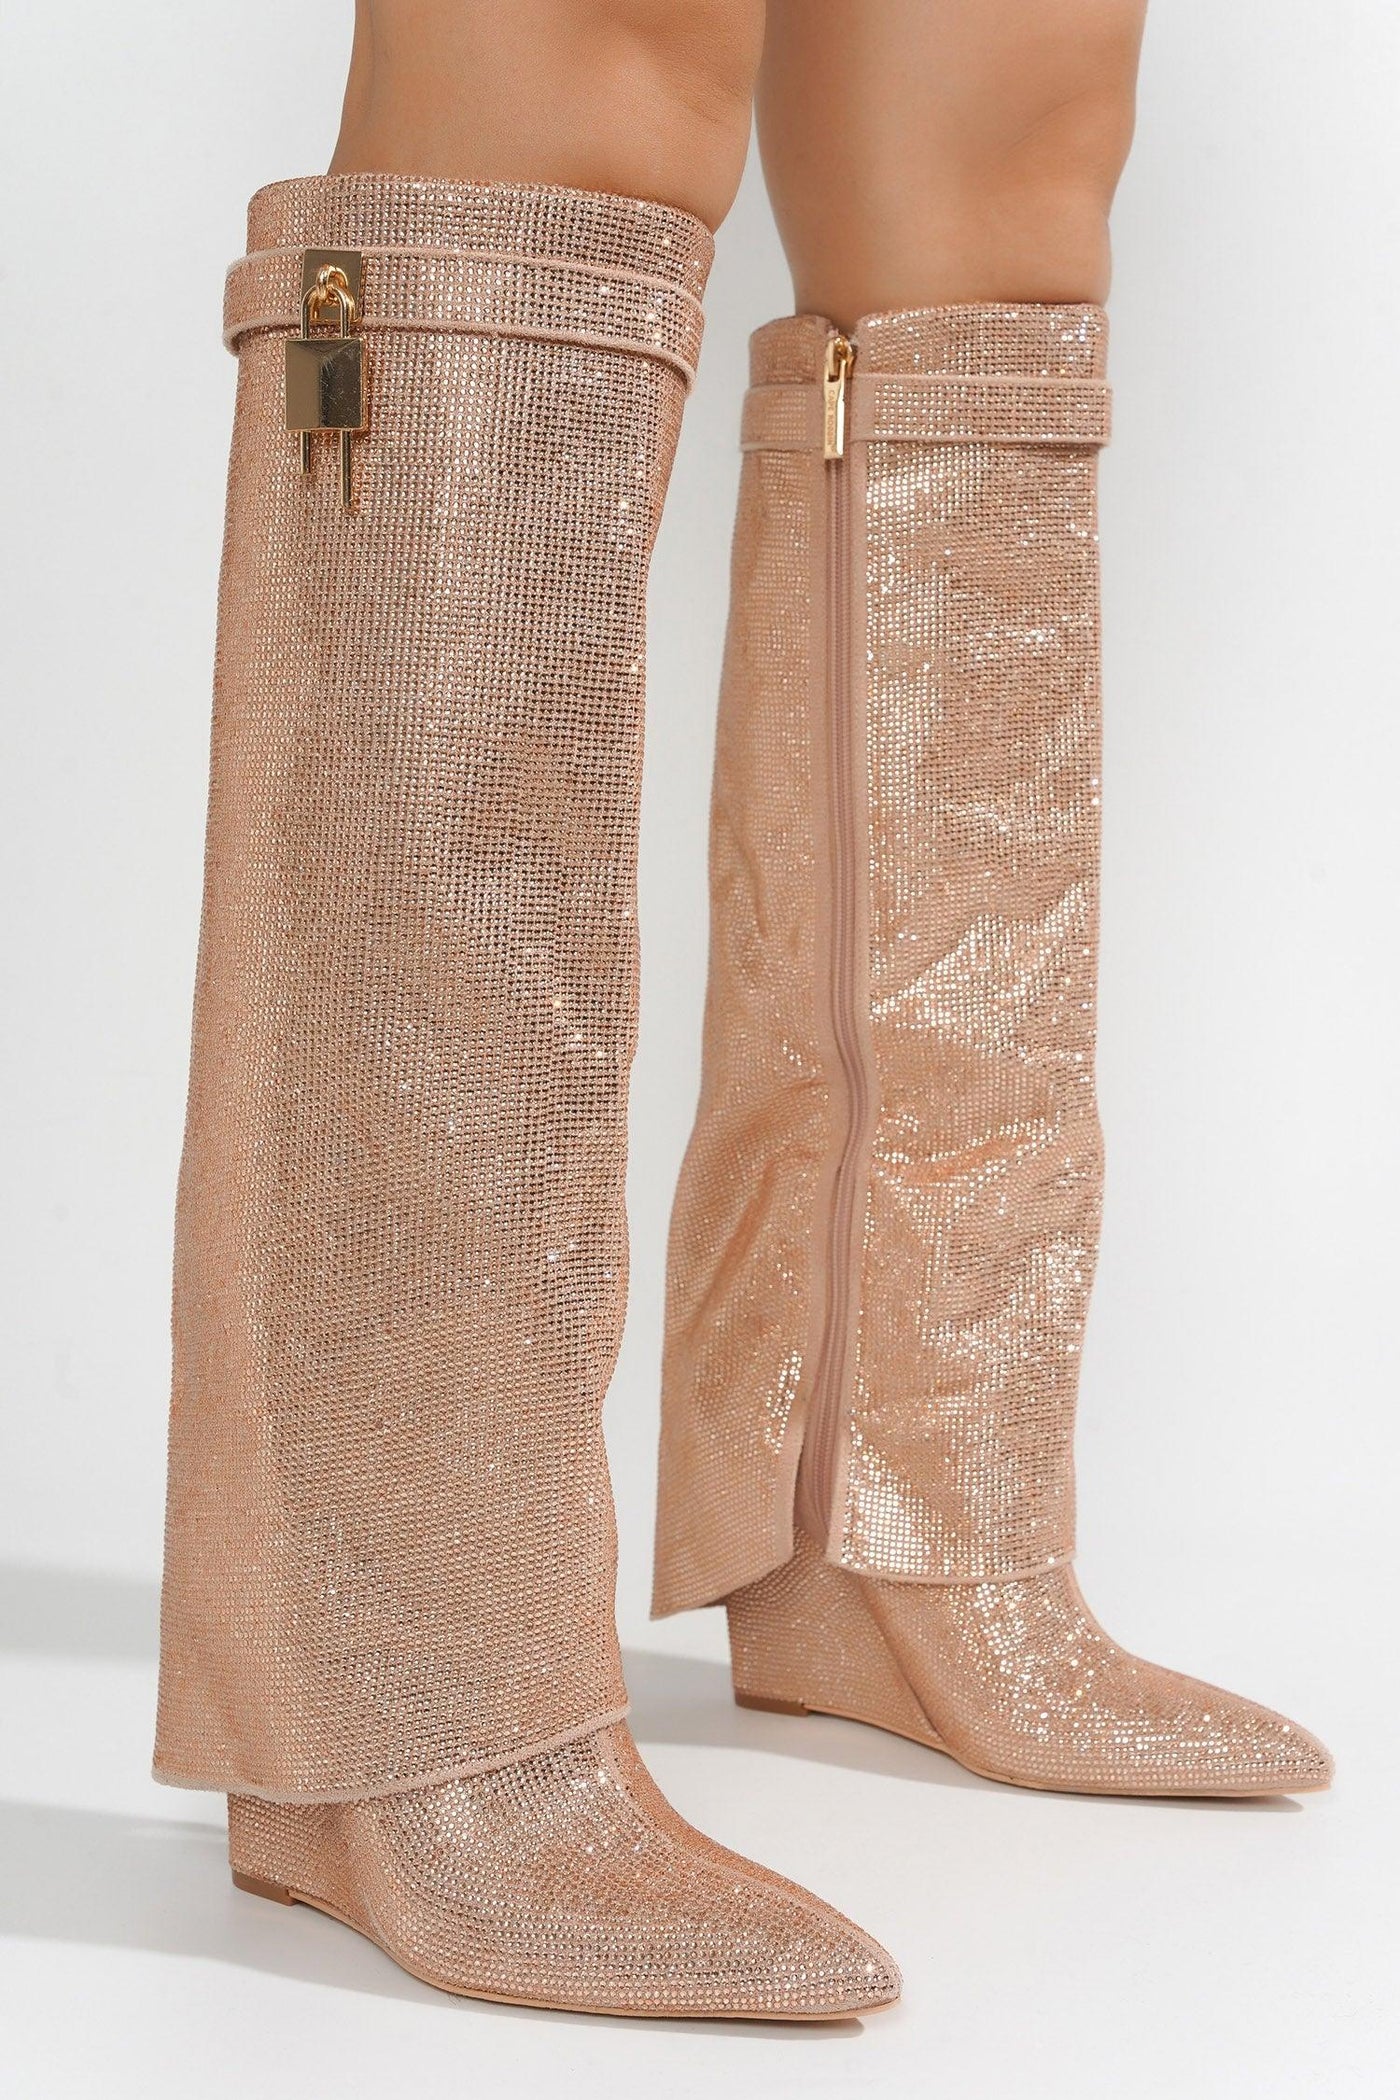 CRARA - ROSE GOLD Thigh High Boots - AMIClubwear